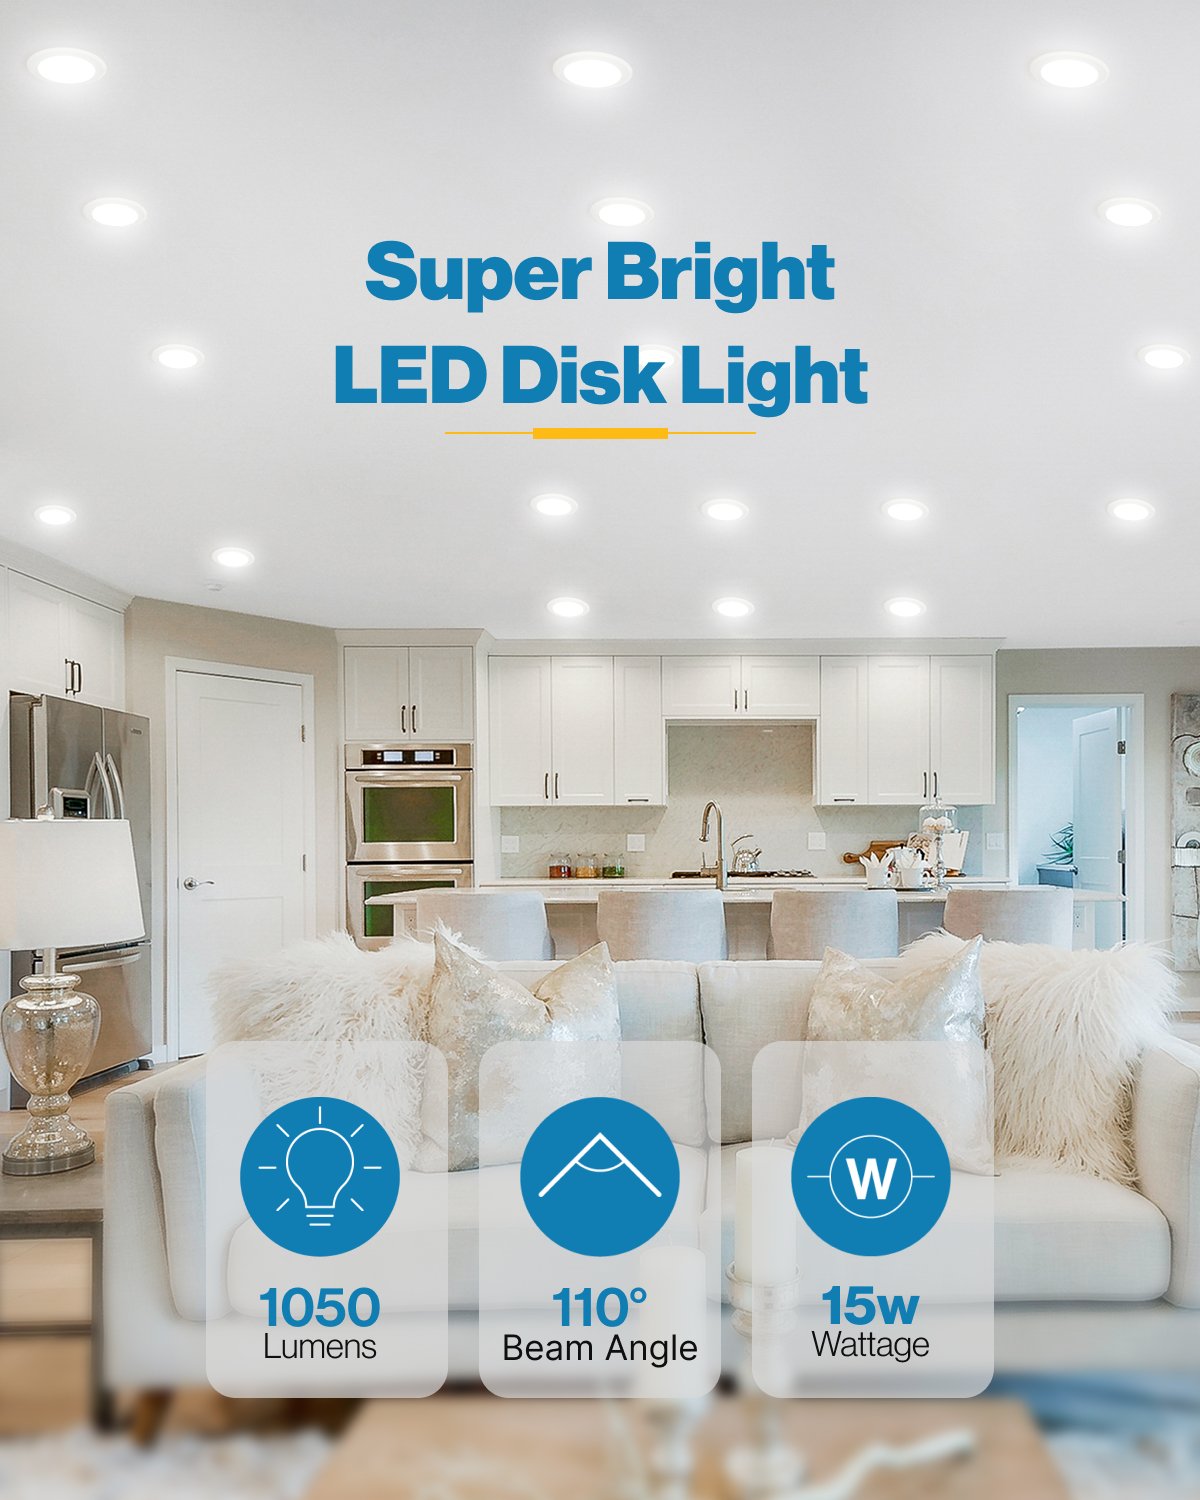 Bright-Living 6000-Lumens Multi-Angle LED Utility Light